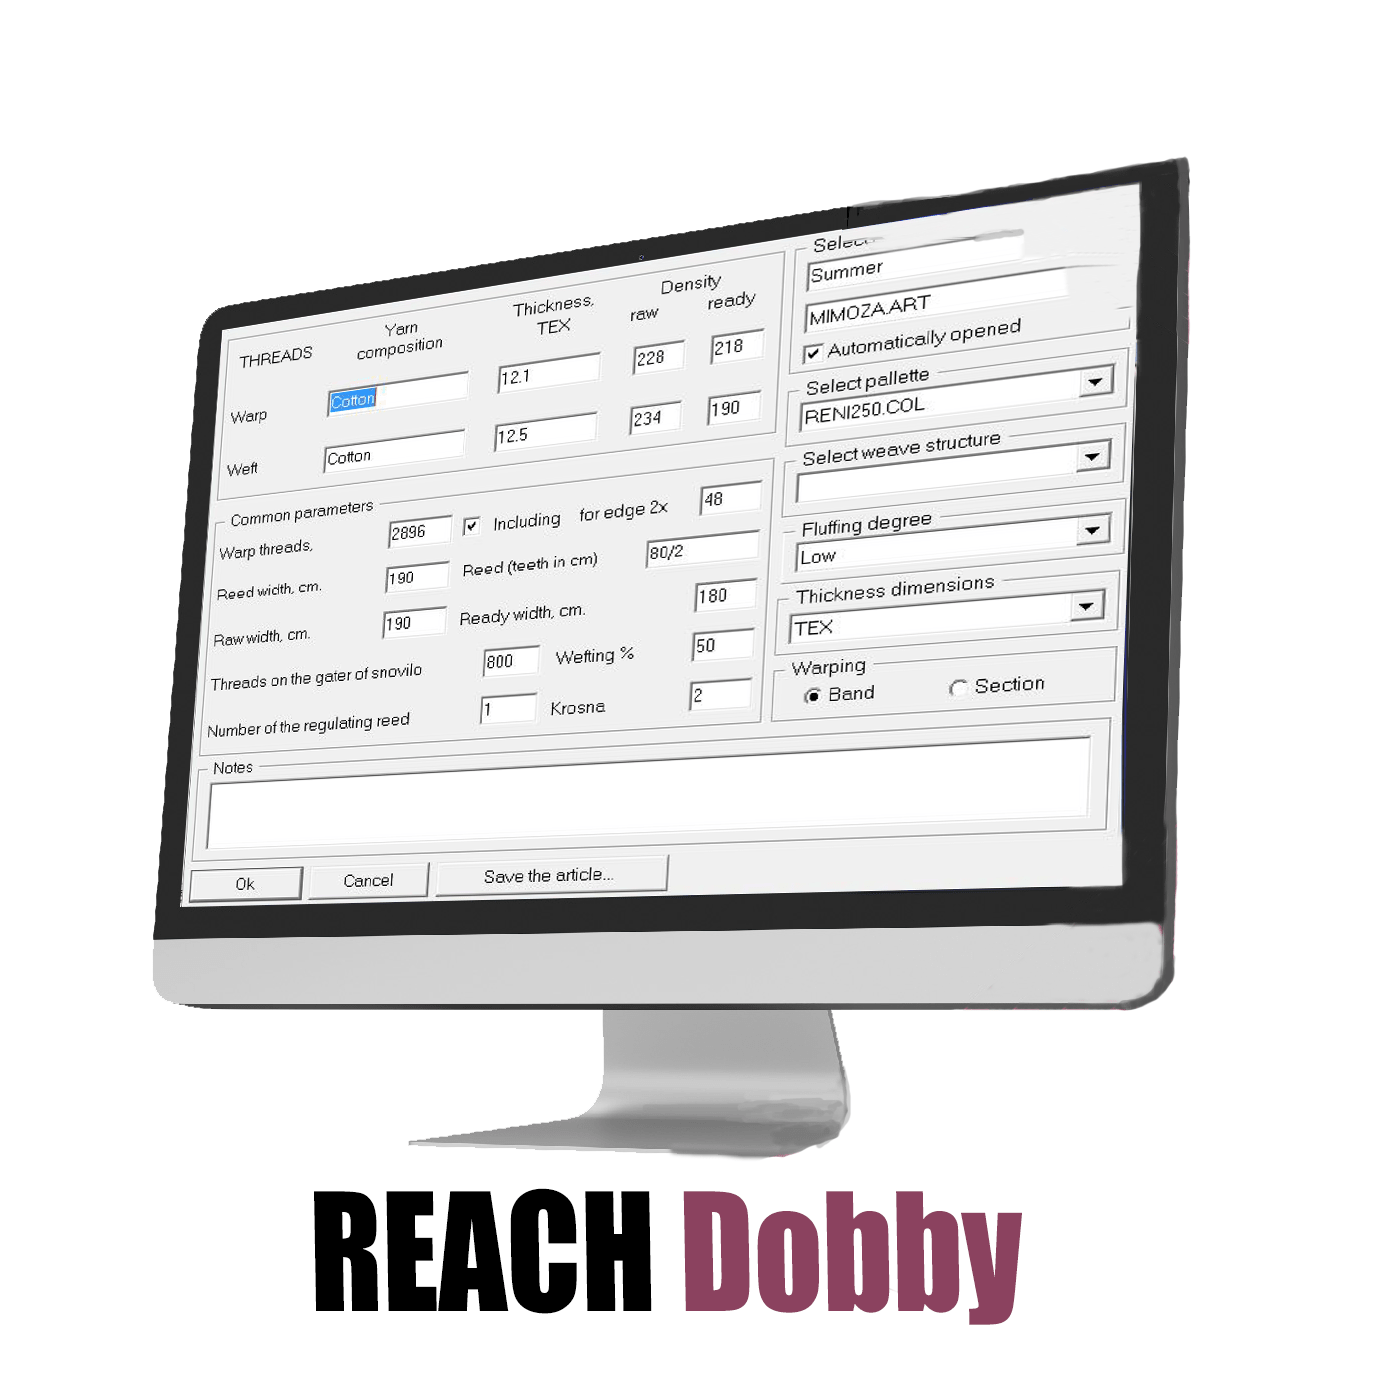 REACH Dobby Image 2